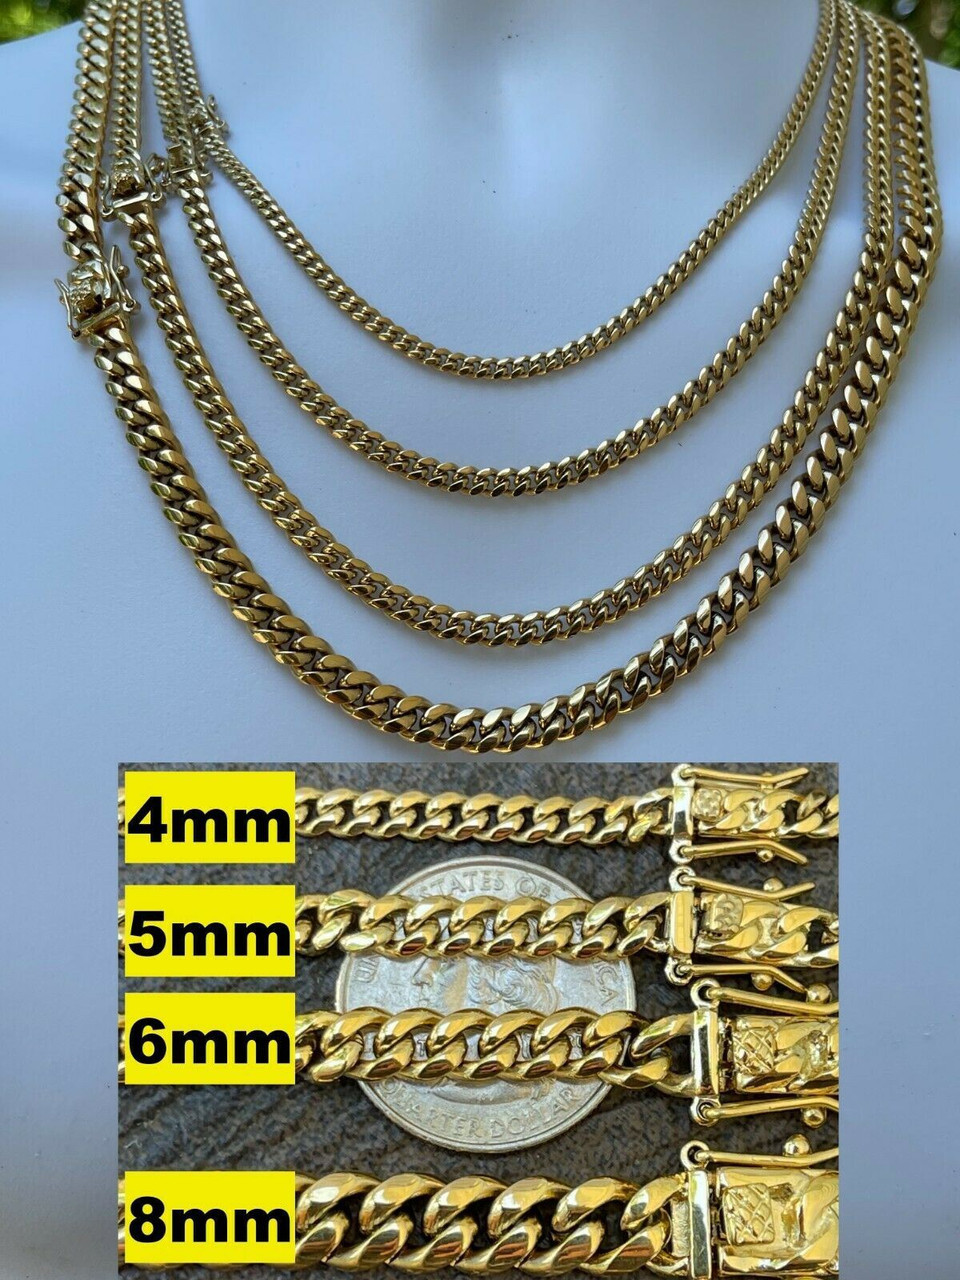 Florida Panthers Gold FLA Mini Lock Necklace